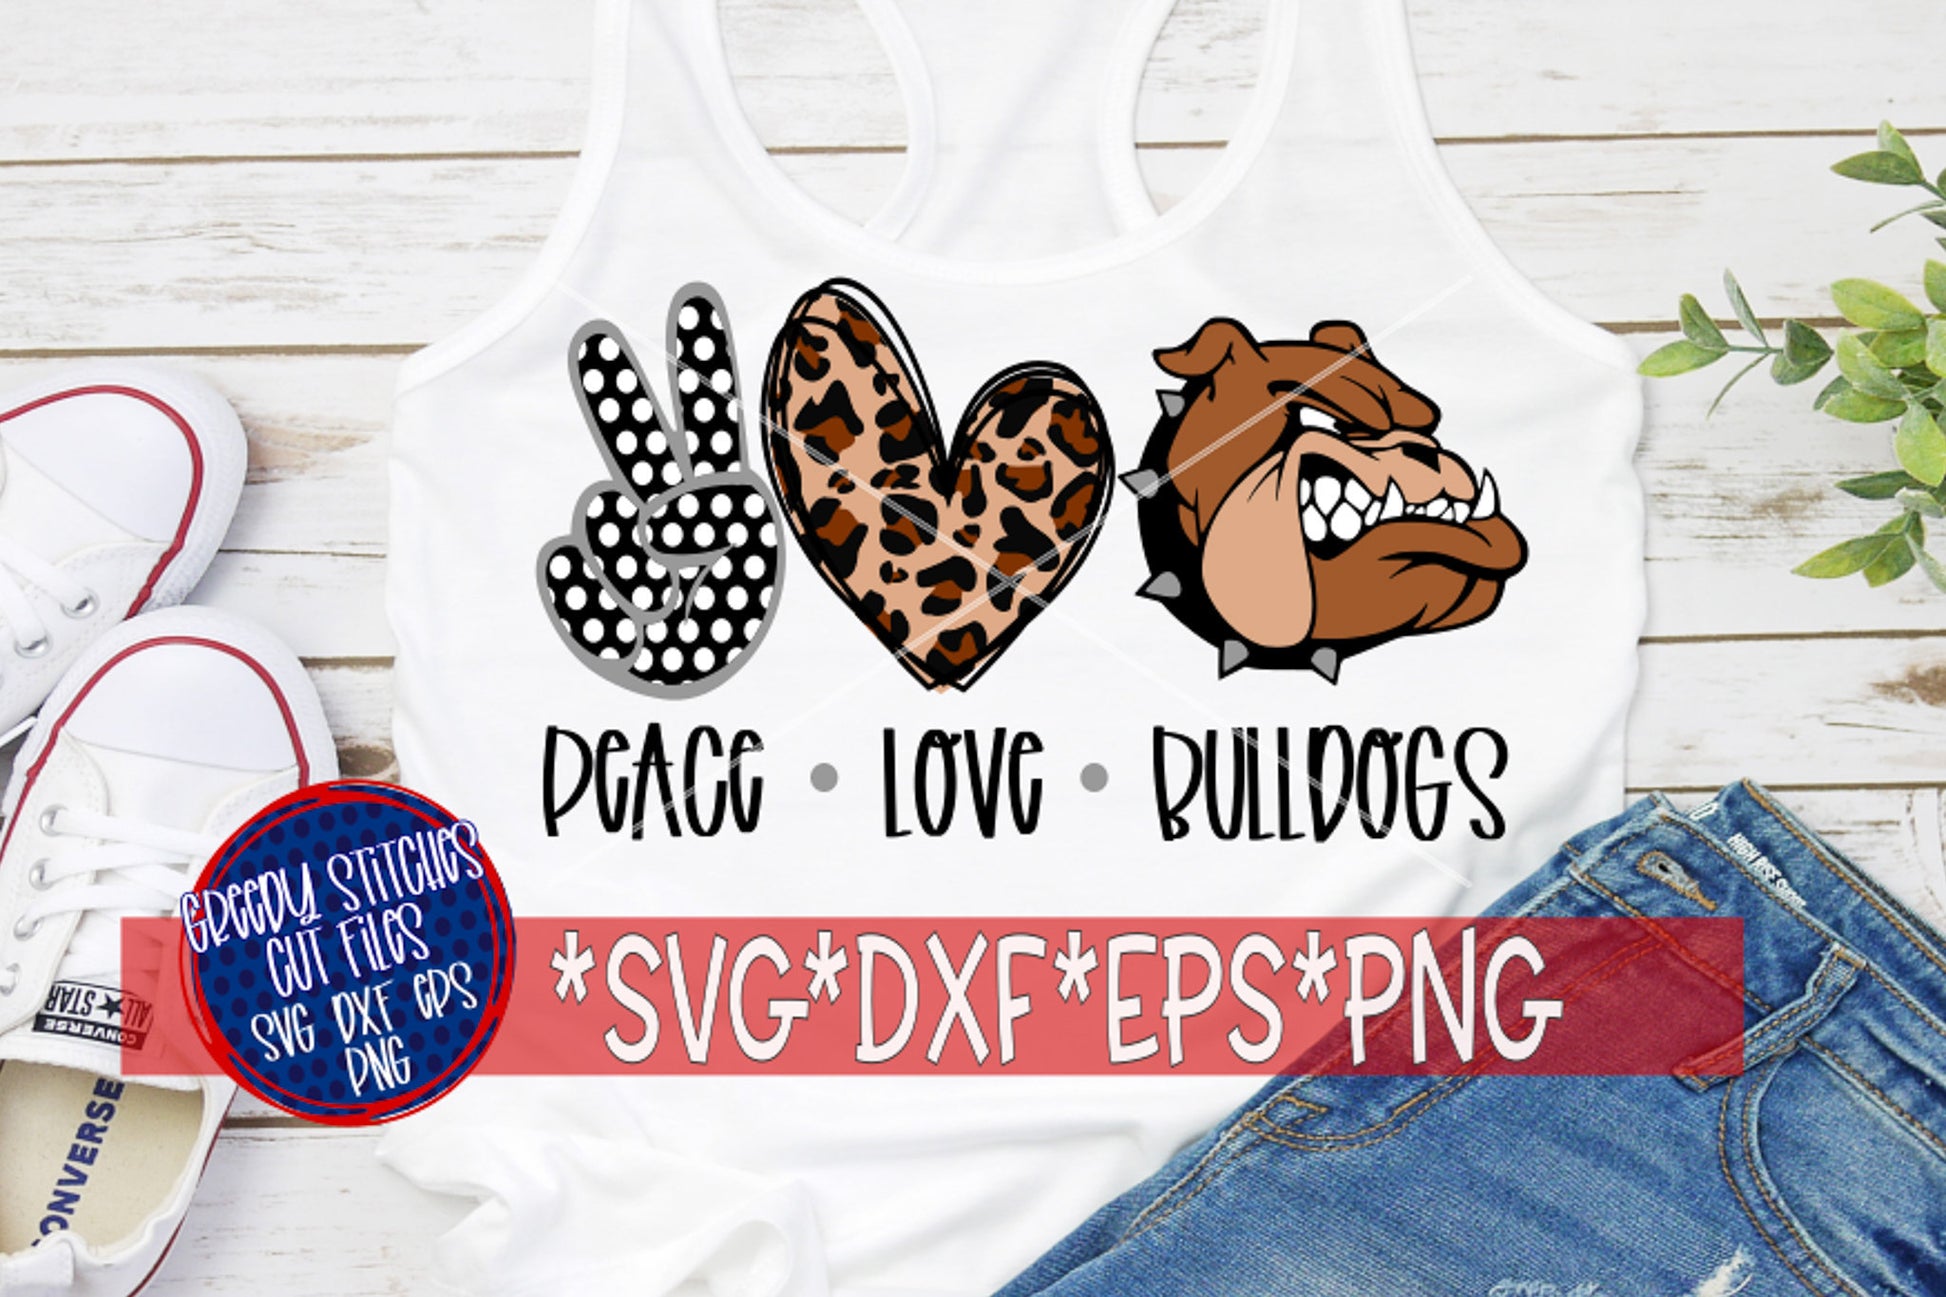 Bulldogs SvG | Peace Love Bulldogs svg dxf eps png. Peace Love Bulldogs SvG | Vancleave High School SvG | Instant Download Cut File